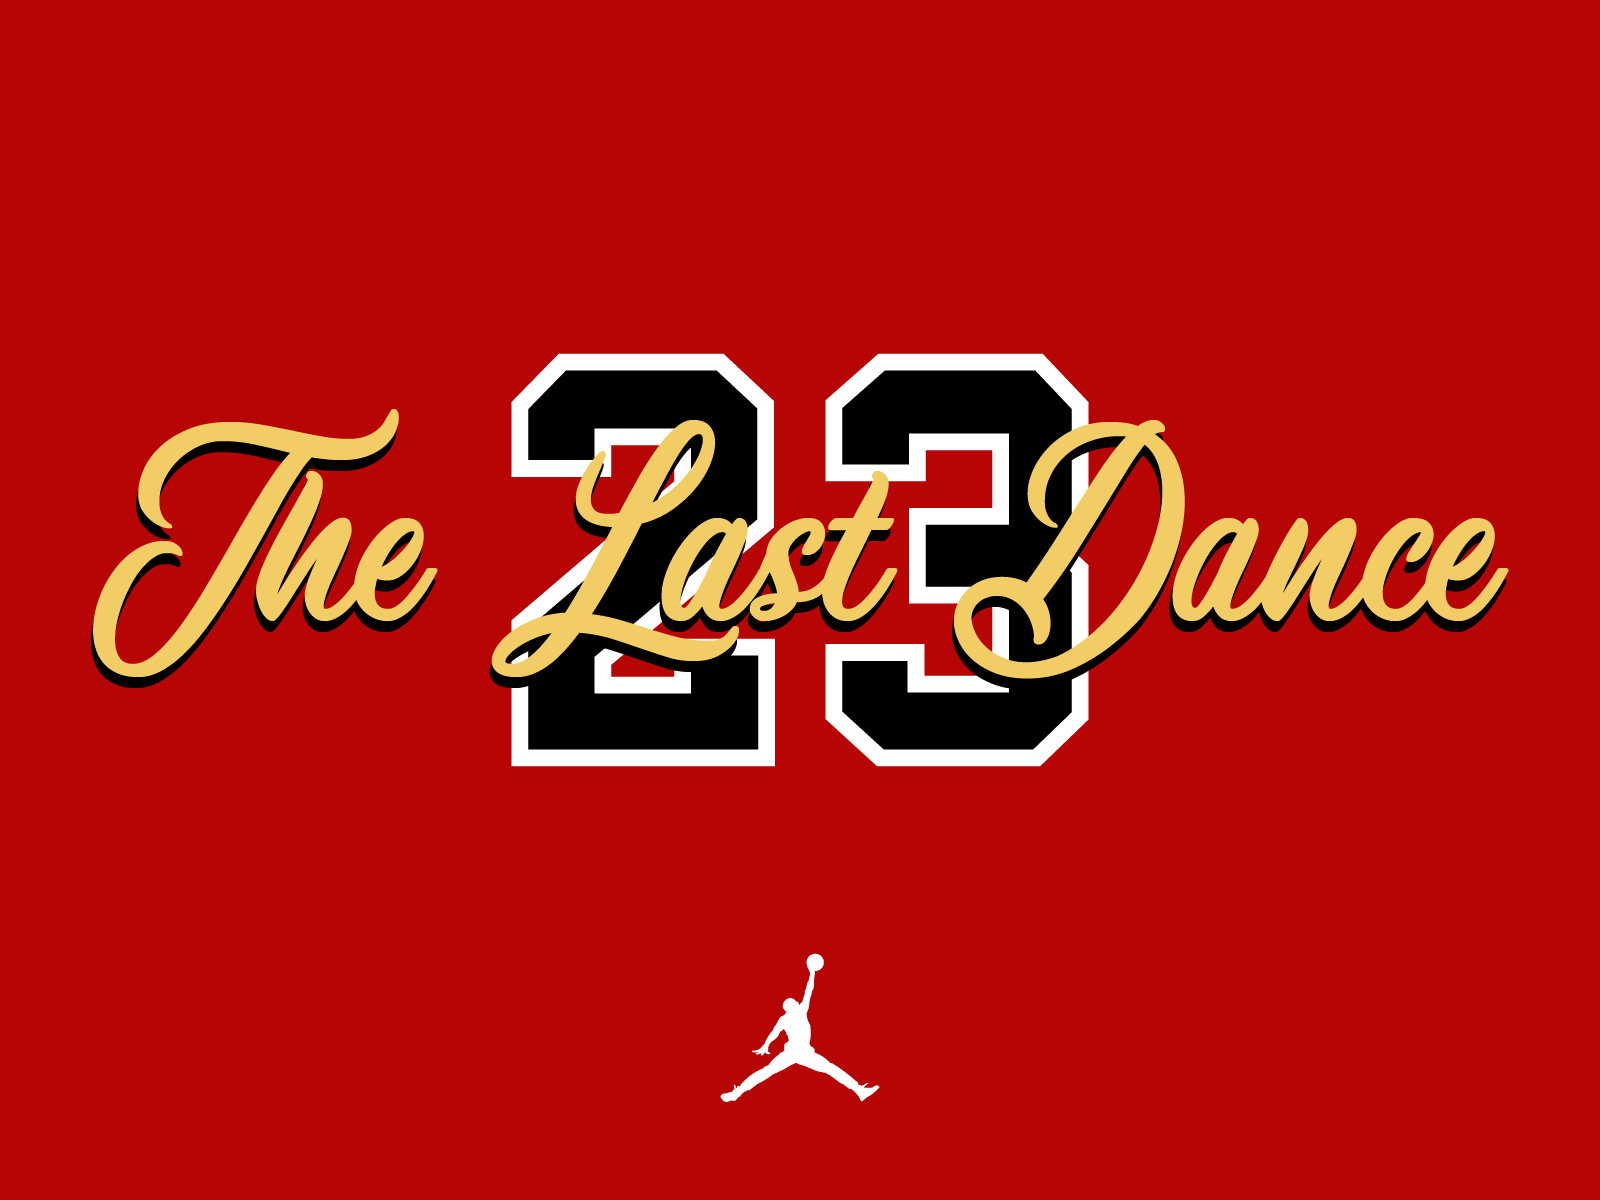 The Last Dance